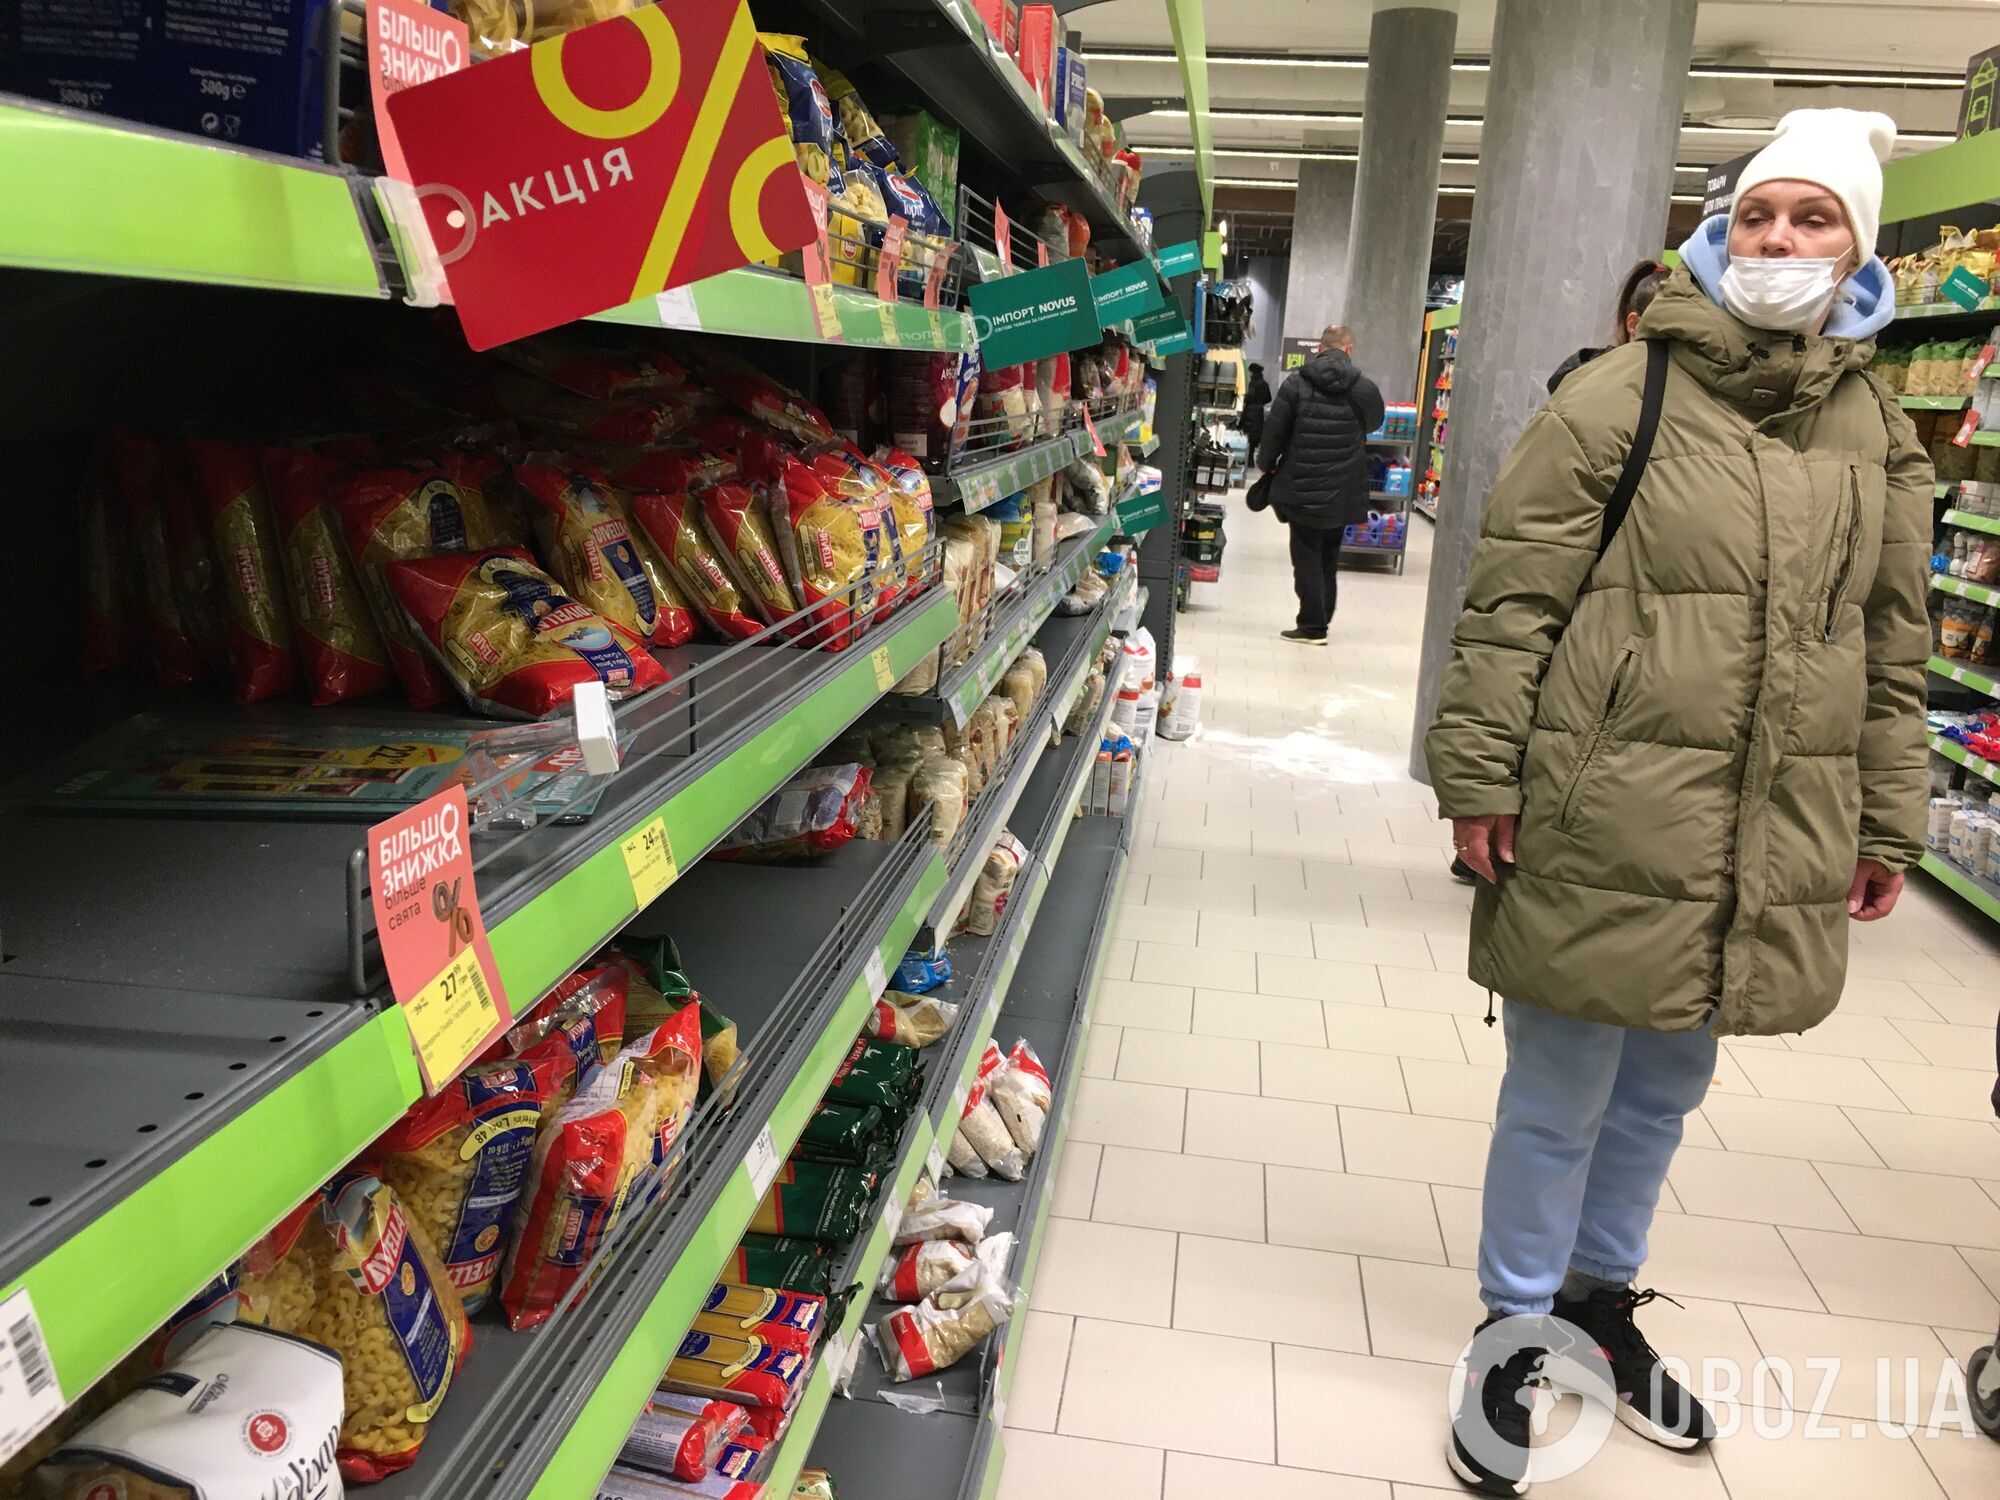 Обстановка в супермаркете "Новус" в центре Киева